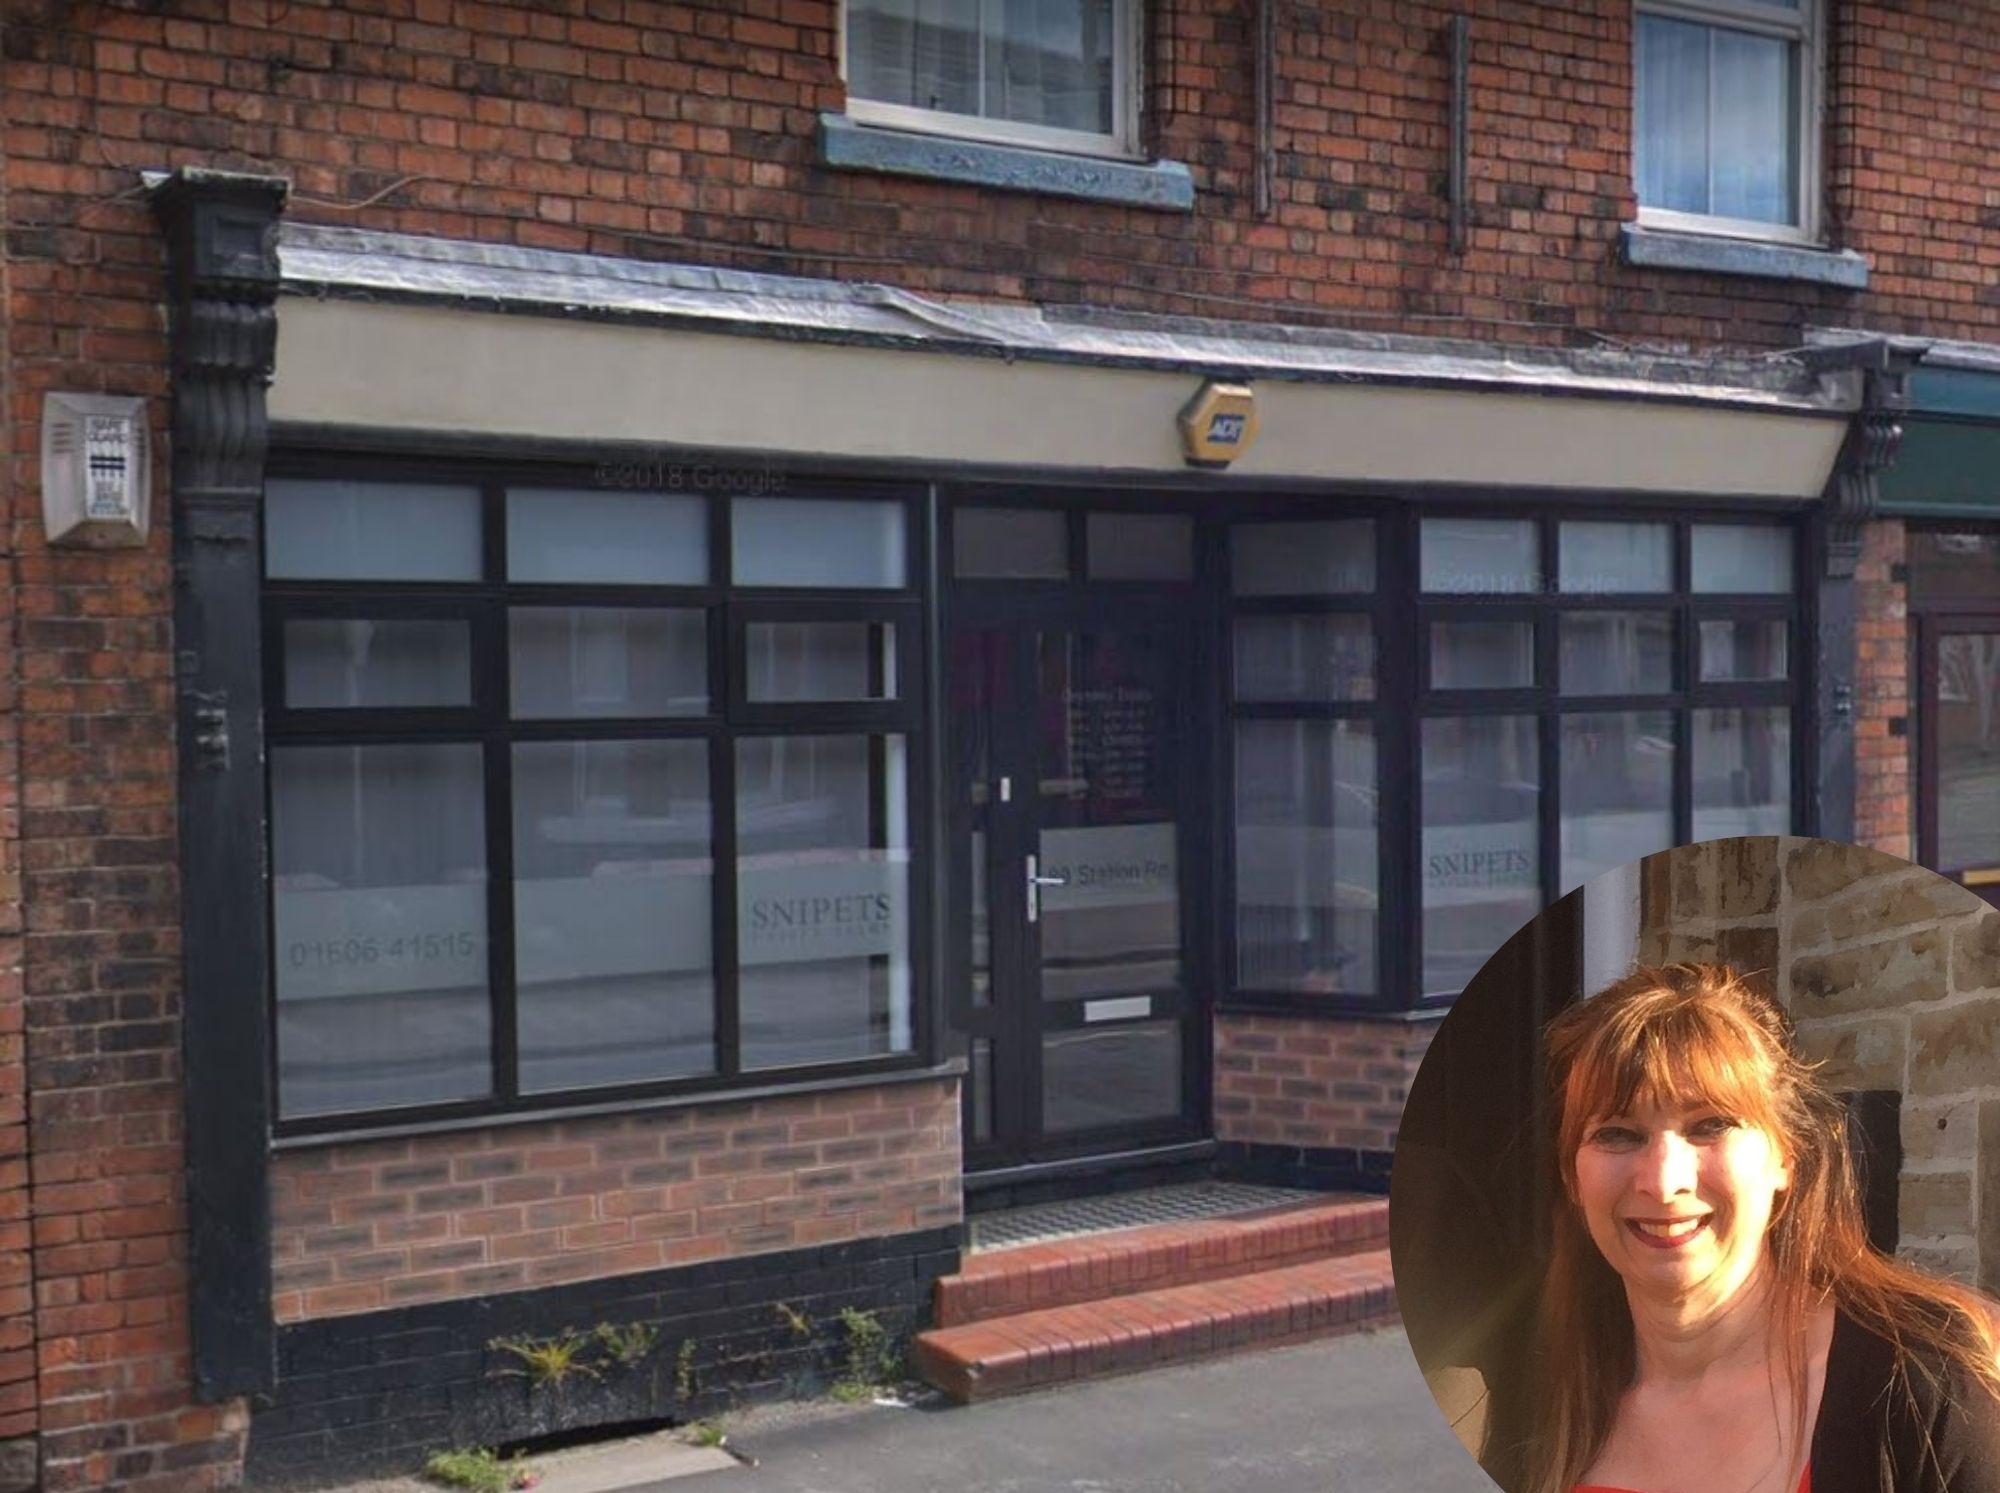 Cllr Alison Gerrard runs the Snipets salon. Image: Google Maps